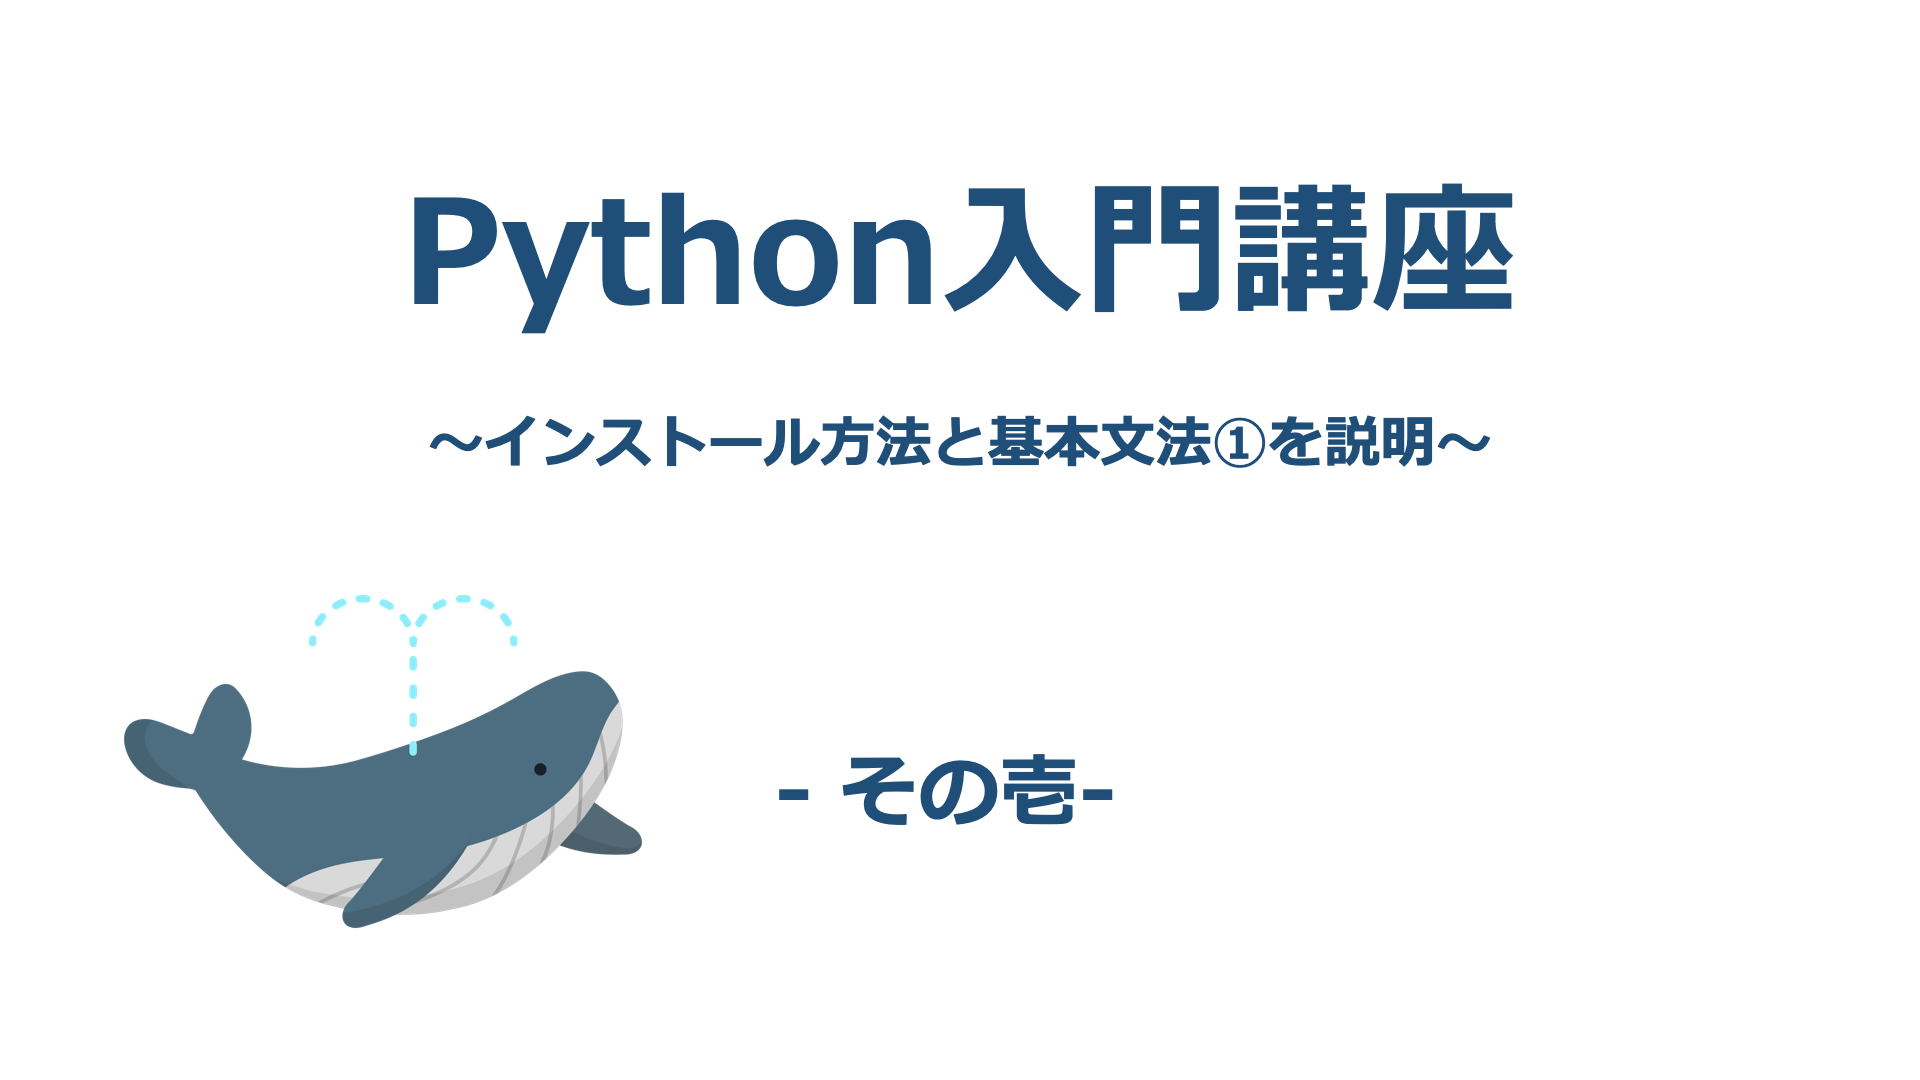 Python01_キャッチ